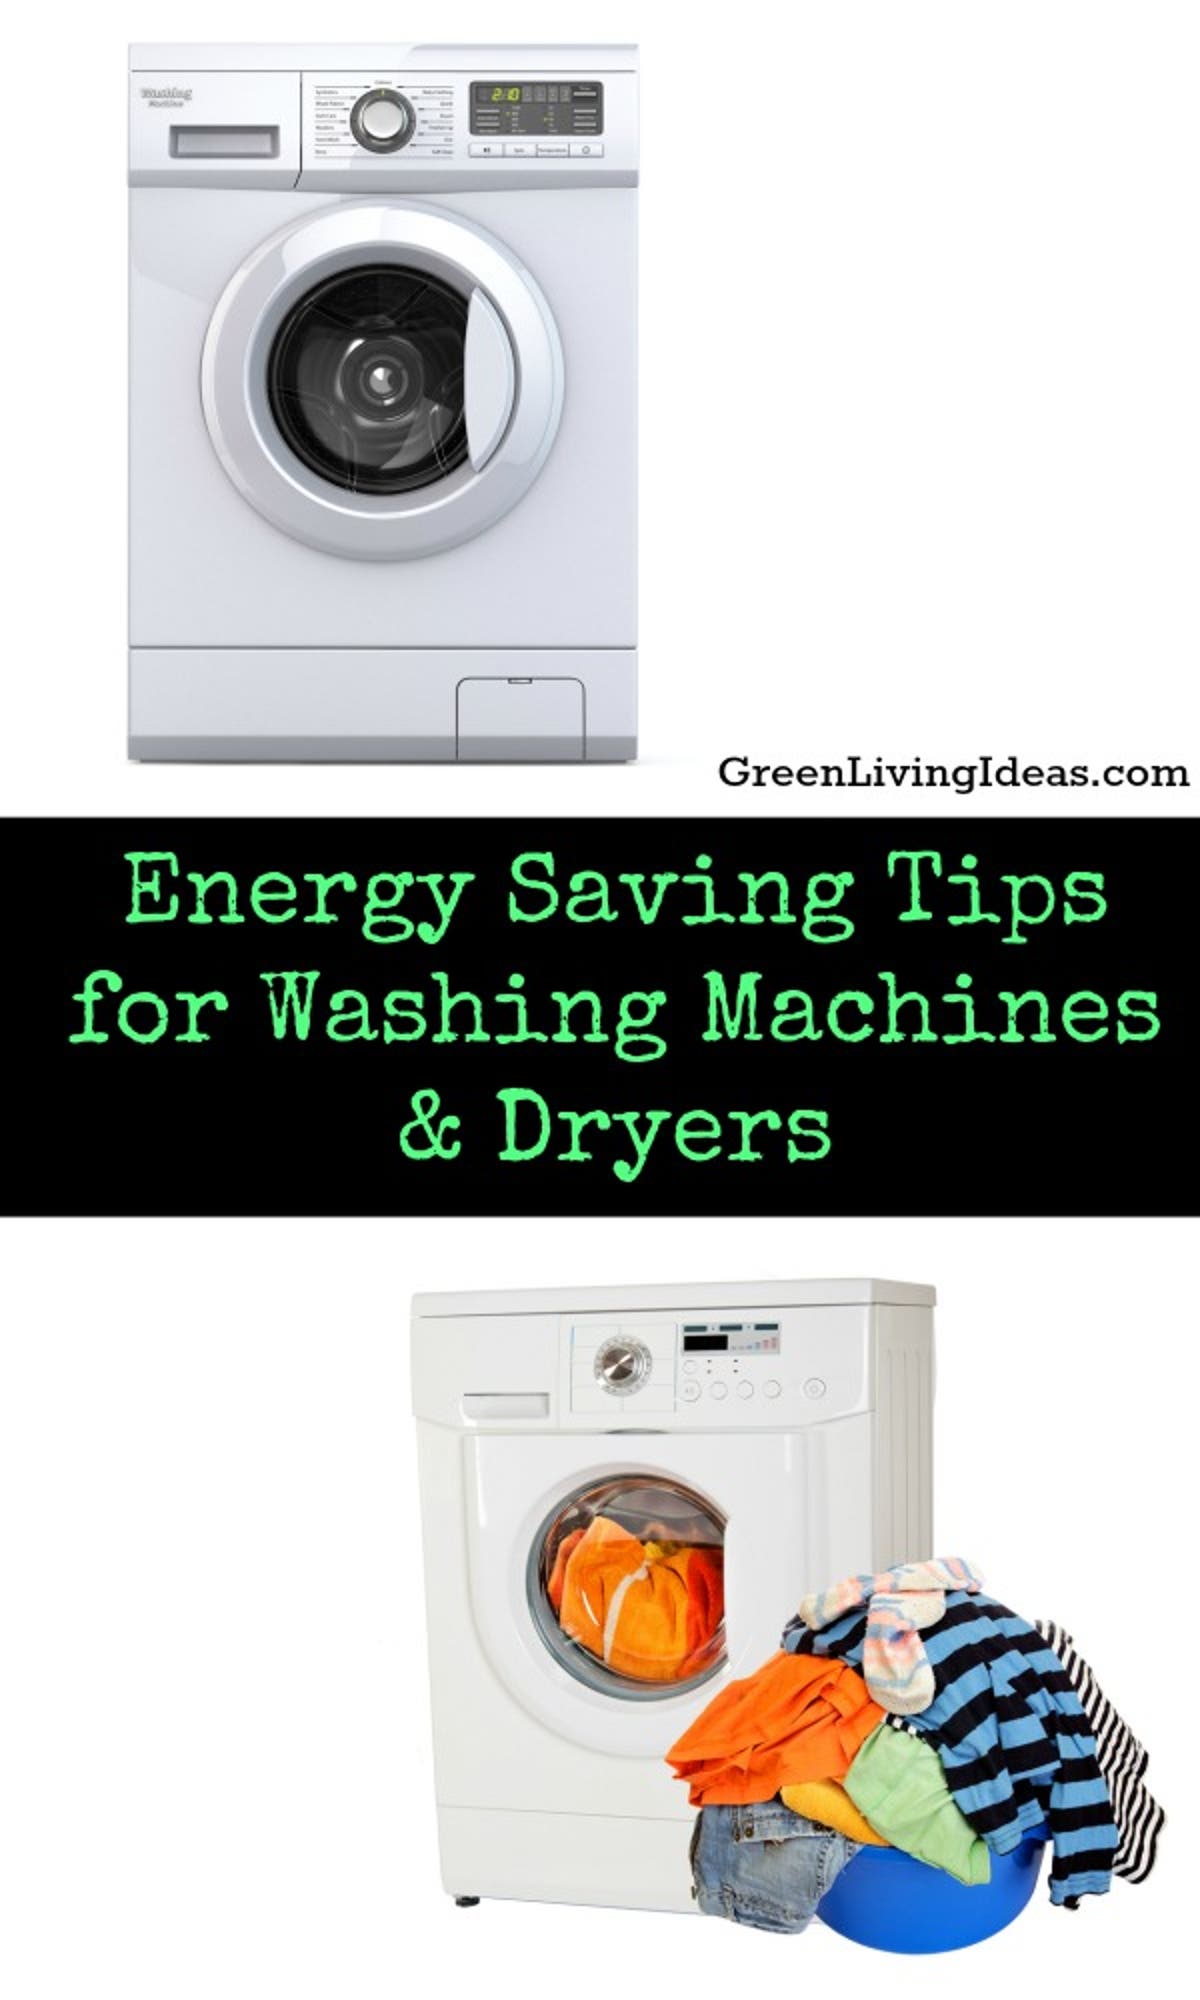 https://live.mrf.io/statics/i/ps/i0.wp.com/greenlivingideas.com/wp-content/uploads/2015/07/Energy-Saving-Tips-for-Washing-Machines-Dryers.jpg?fit=600%2C1000&ssl=1&width=1200&enable=upscale